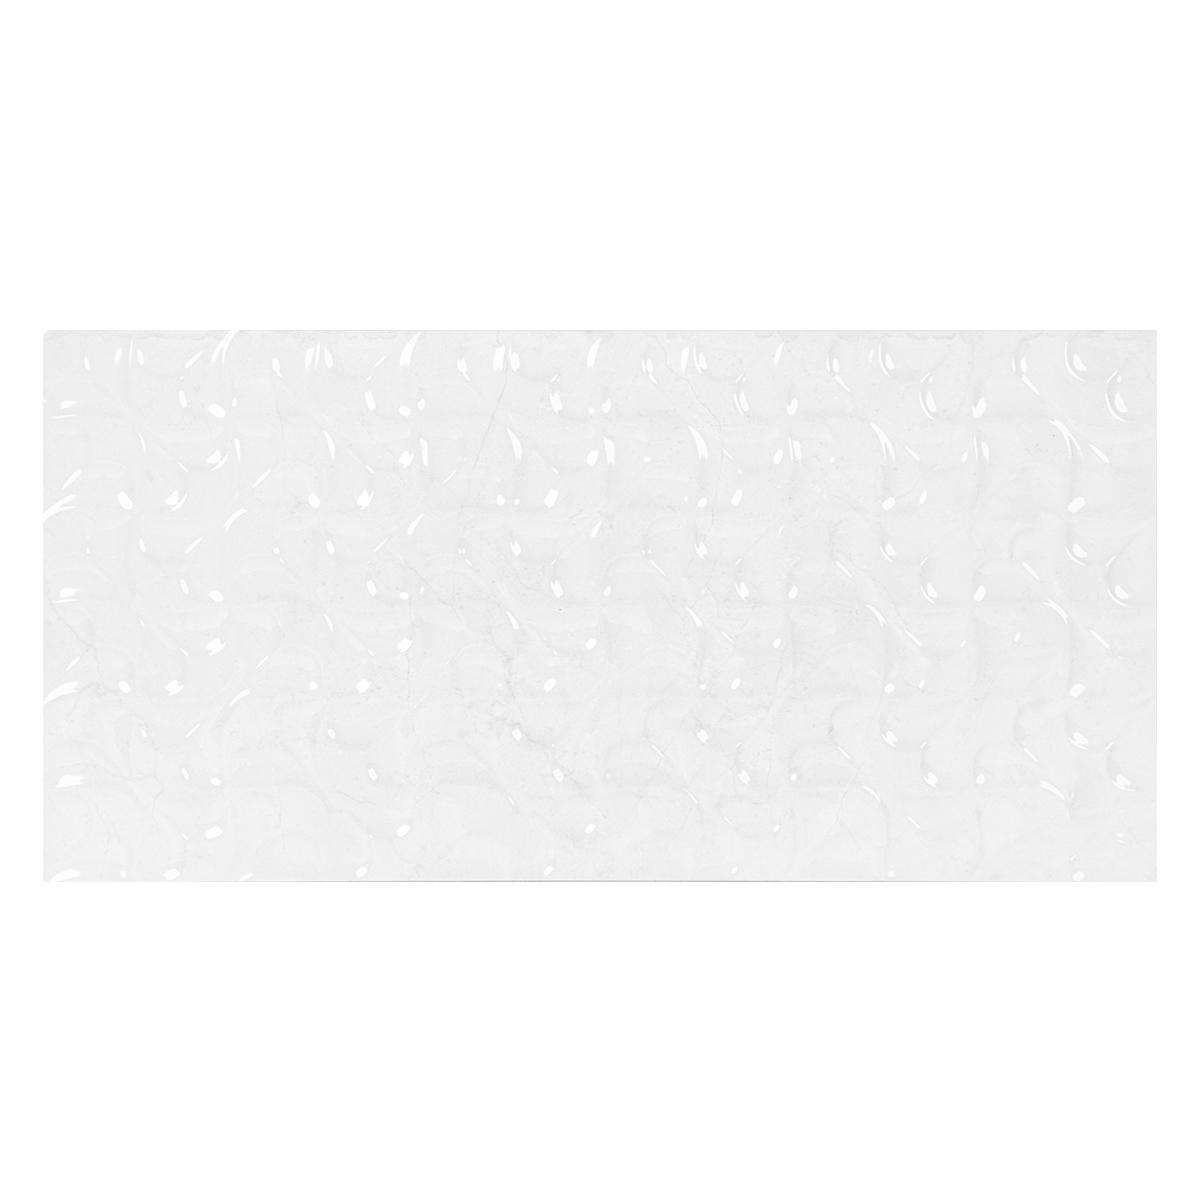 Mayólica Clover Blanco Brillante - 30X60 cm - 1.44 m2